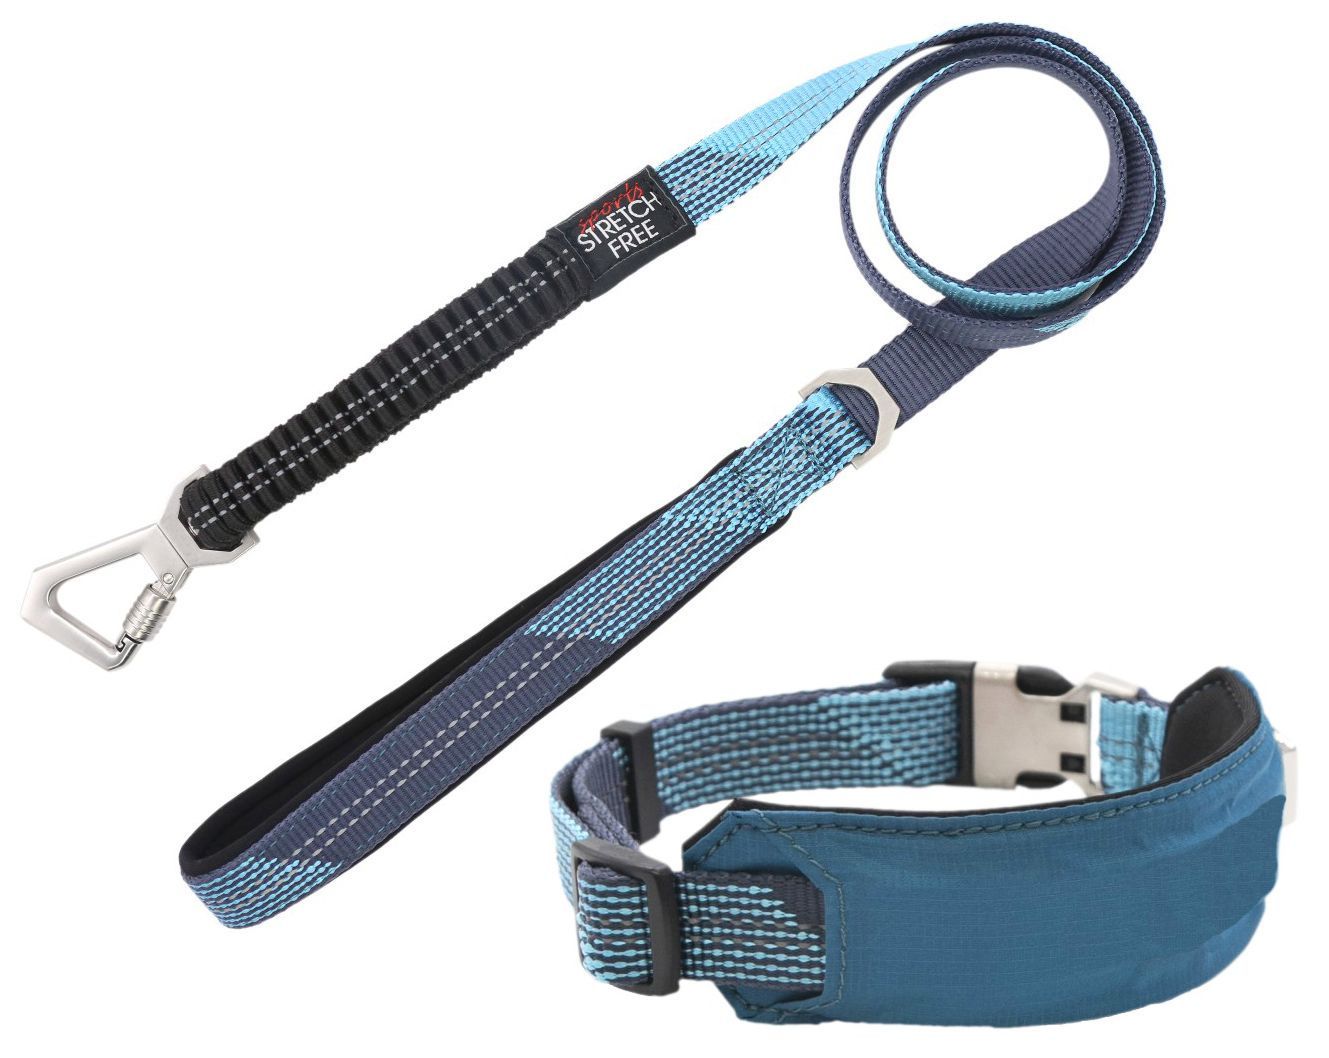 Pet Life ® 'Geo-prene' 2-in-1 Shock Absorbing Neoprene Padded Reflective Dog Leash and Collar Blue Small